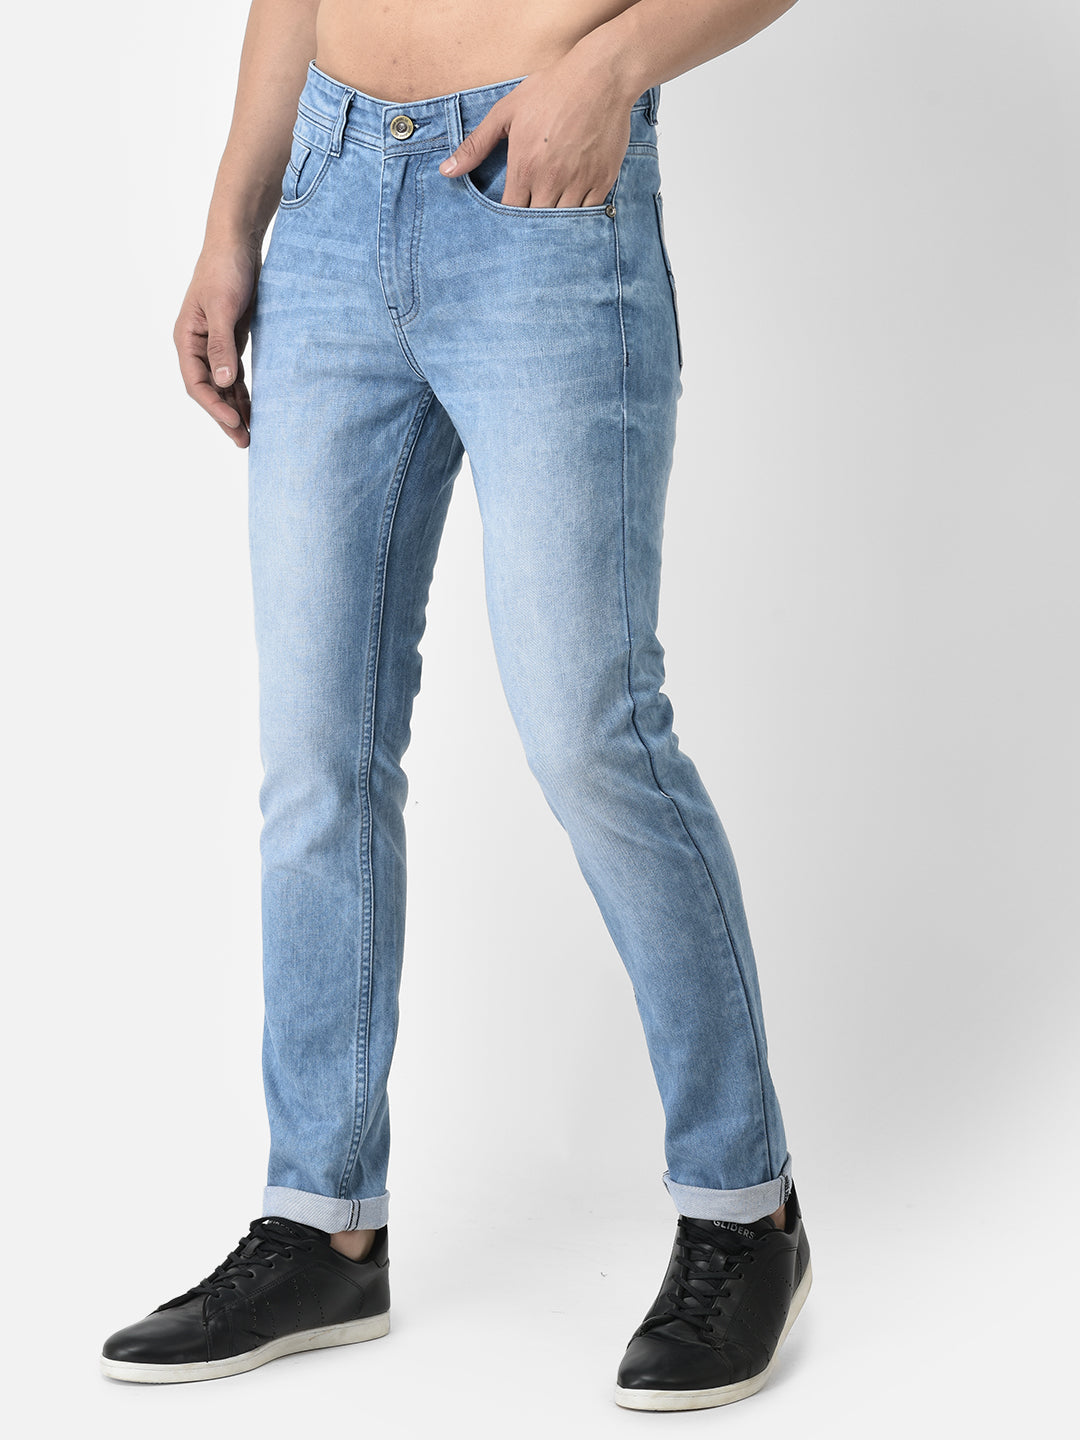 Cobb Sky Blue Narrow Fit Jeans